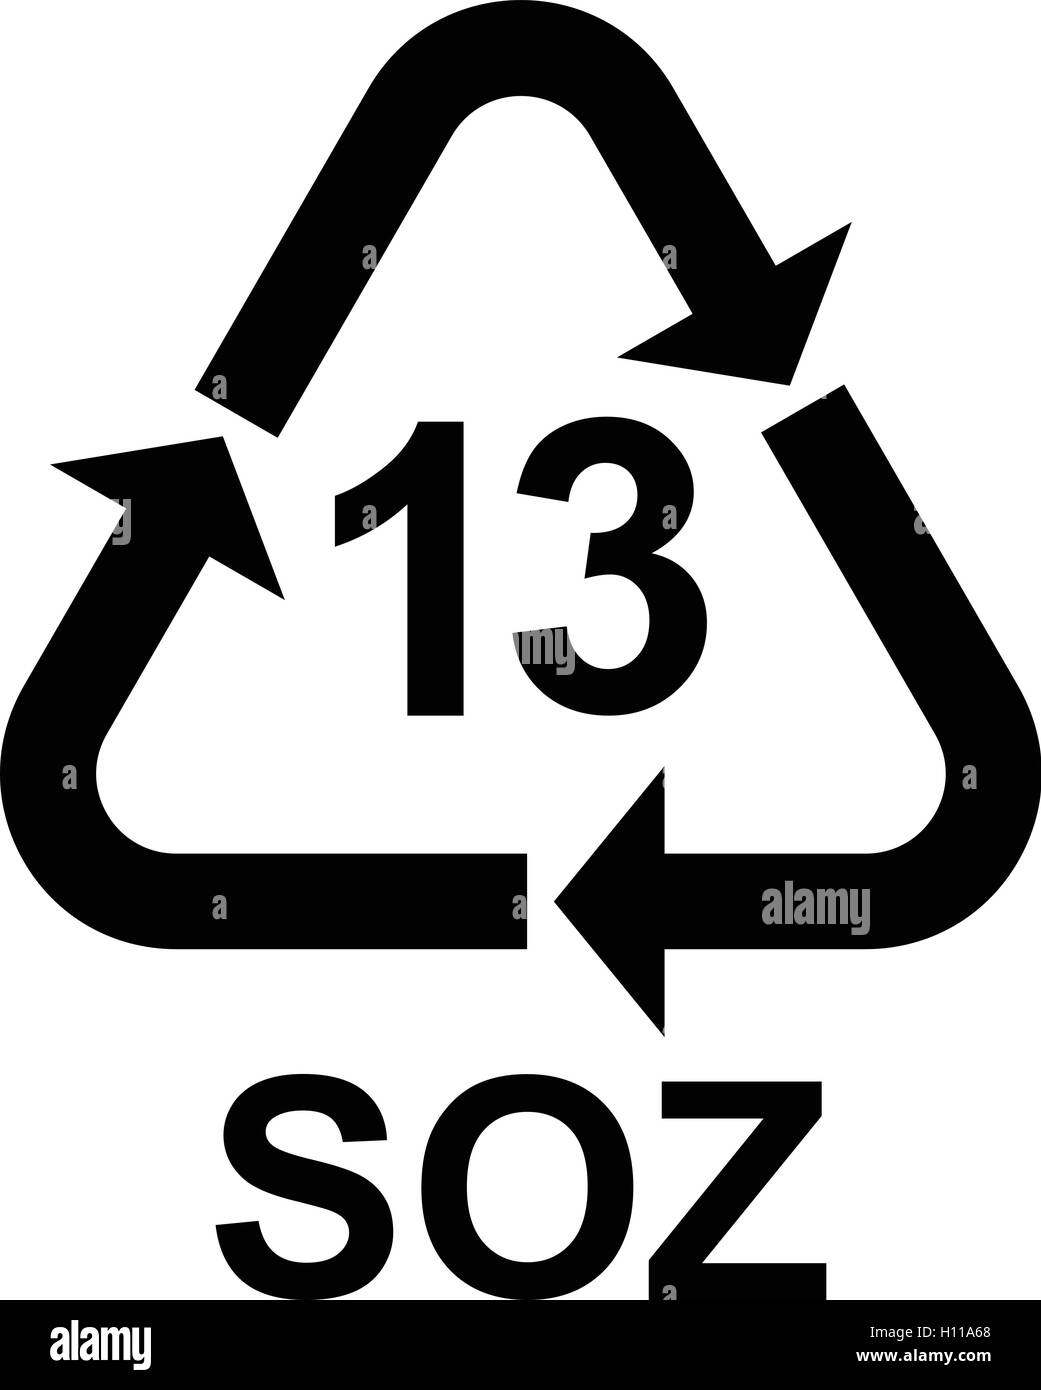 Akku recycling Symbol 13 Soz, Recycling von Batterien Code 13 Soz, Vector Illustration. Stock Vektor